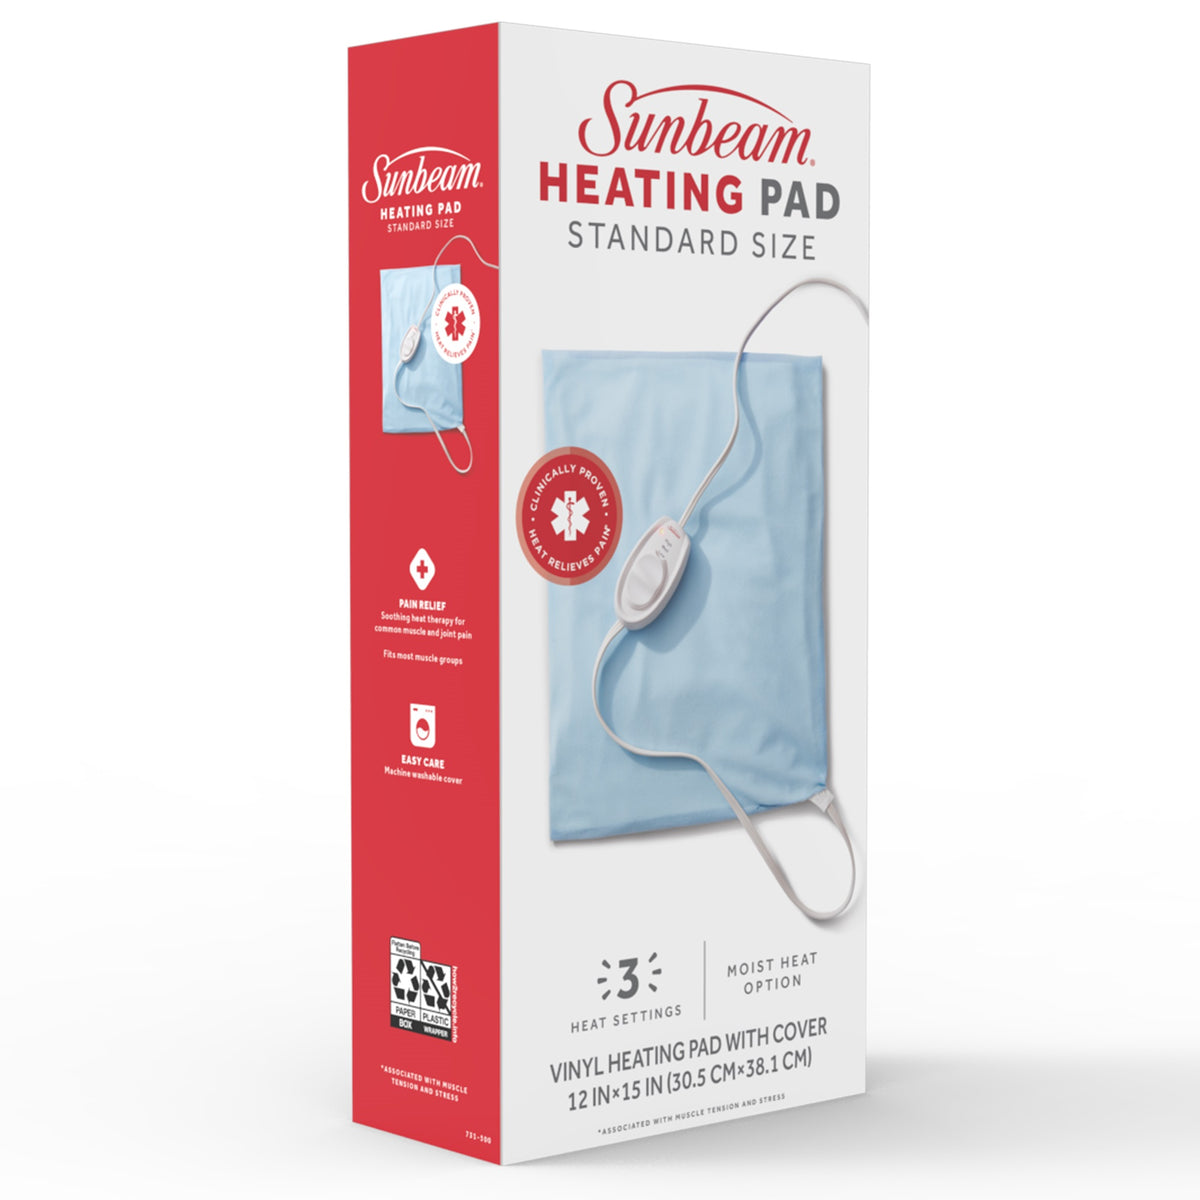 Sunbeam 2101860 Standard Size Heating Pad With UltraHeat Technology, Light Blue